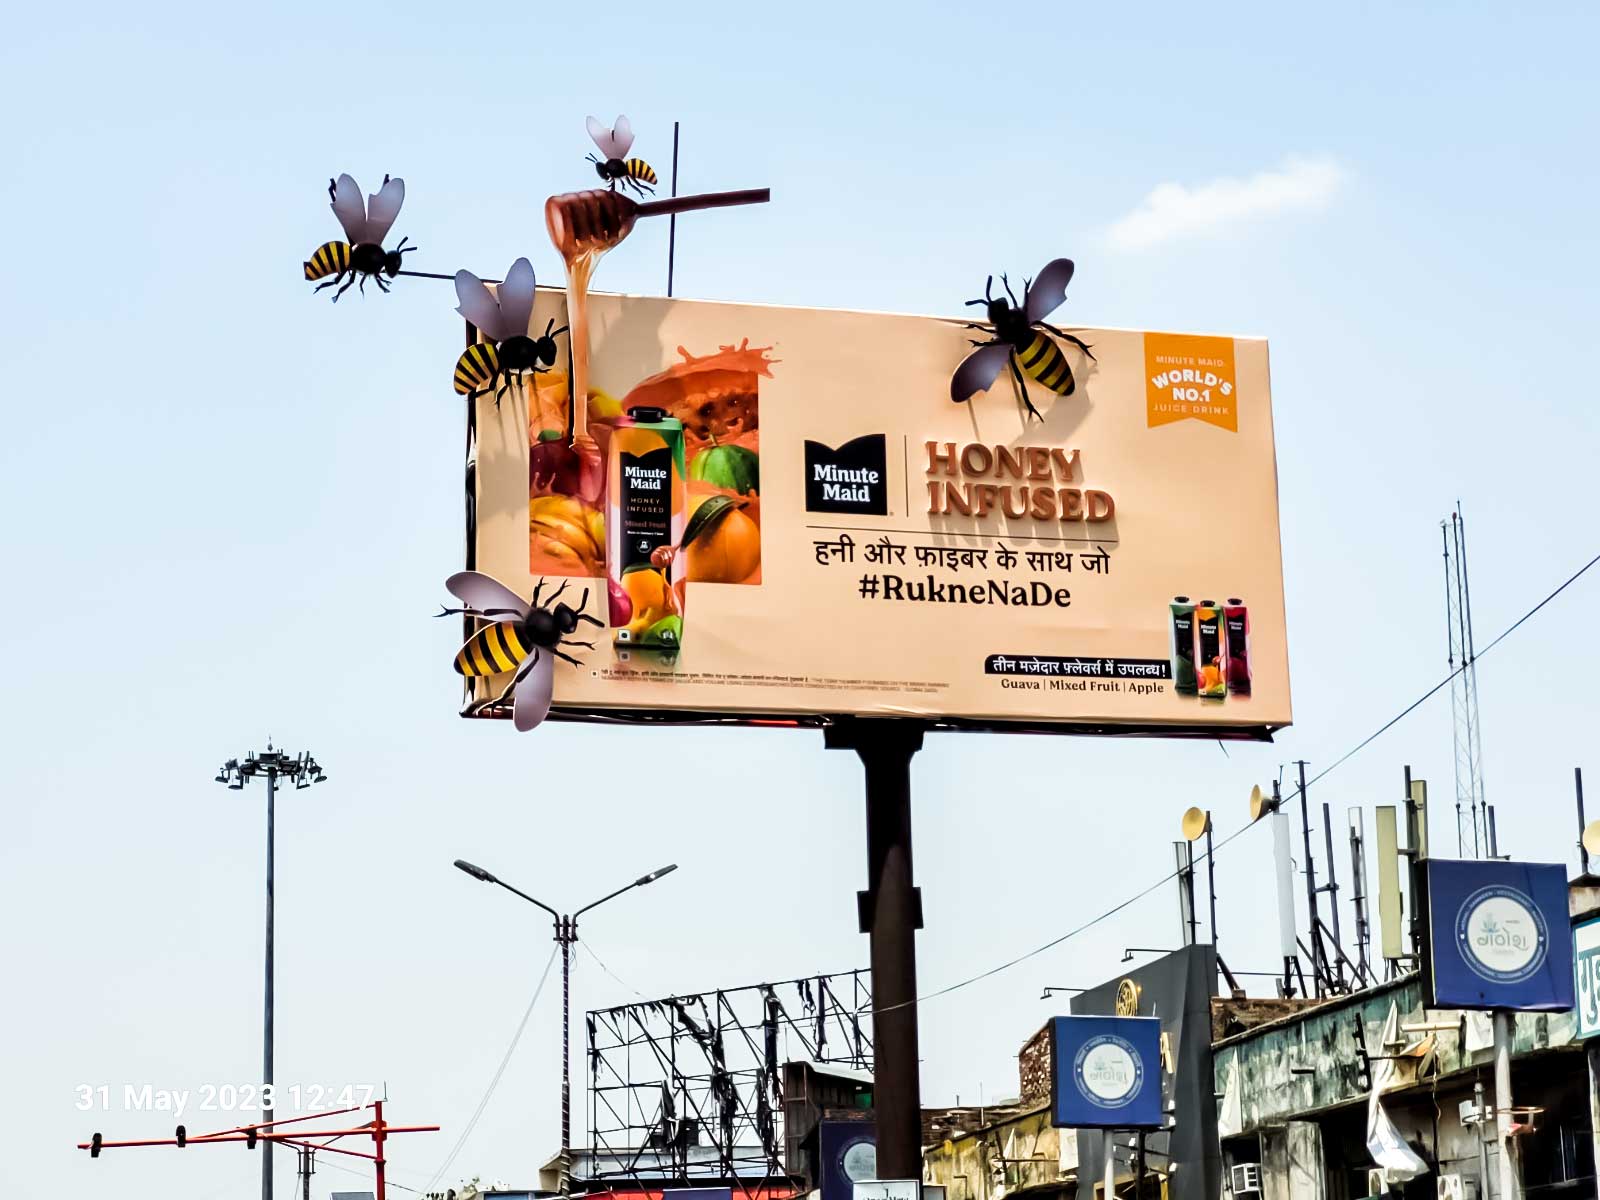 Miniut maid honey creative 3D bee campaign in Gorakhpur